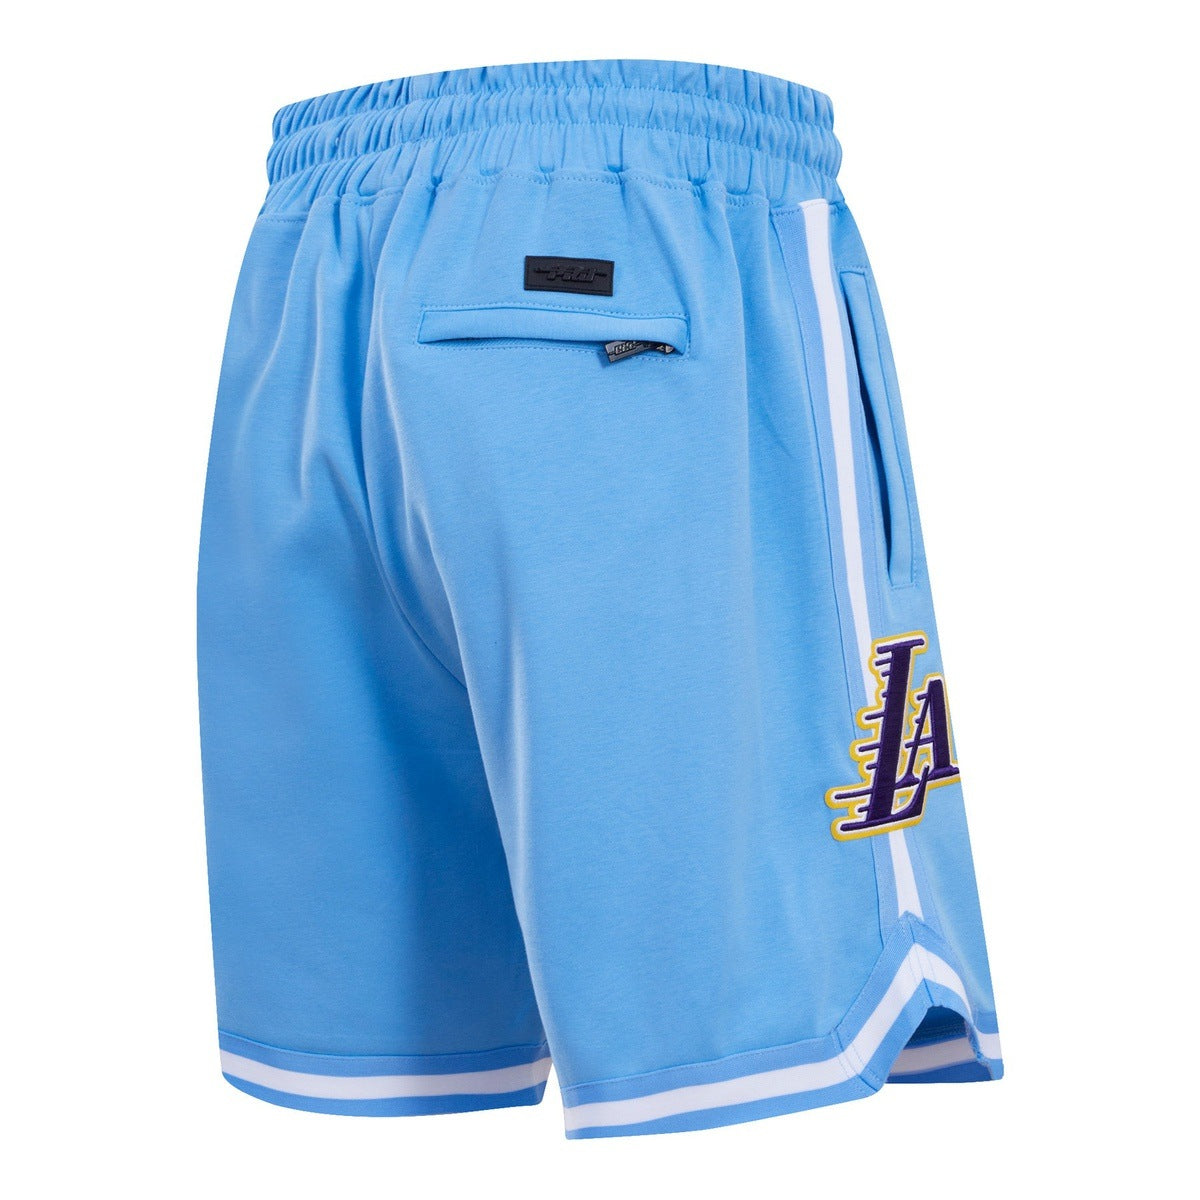 los angeles lakers blue shorts